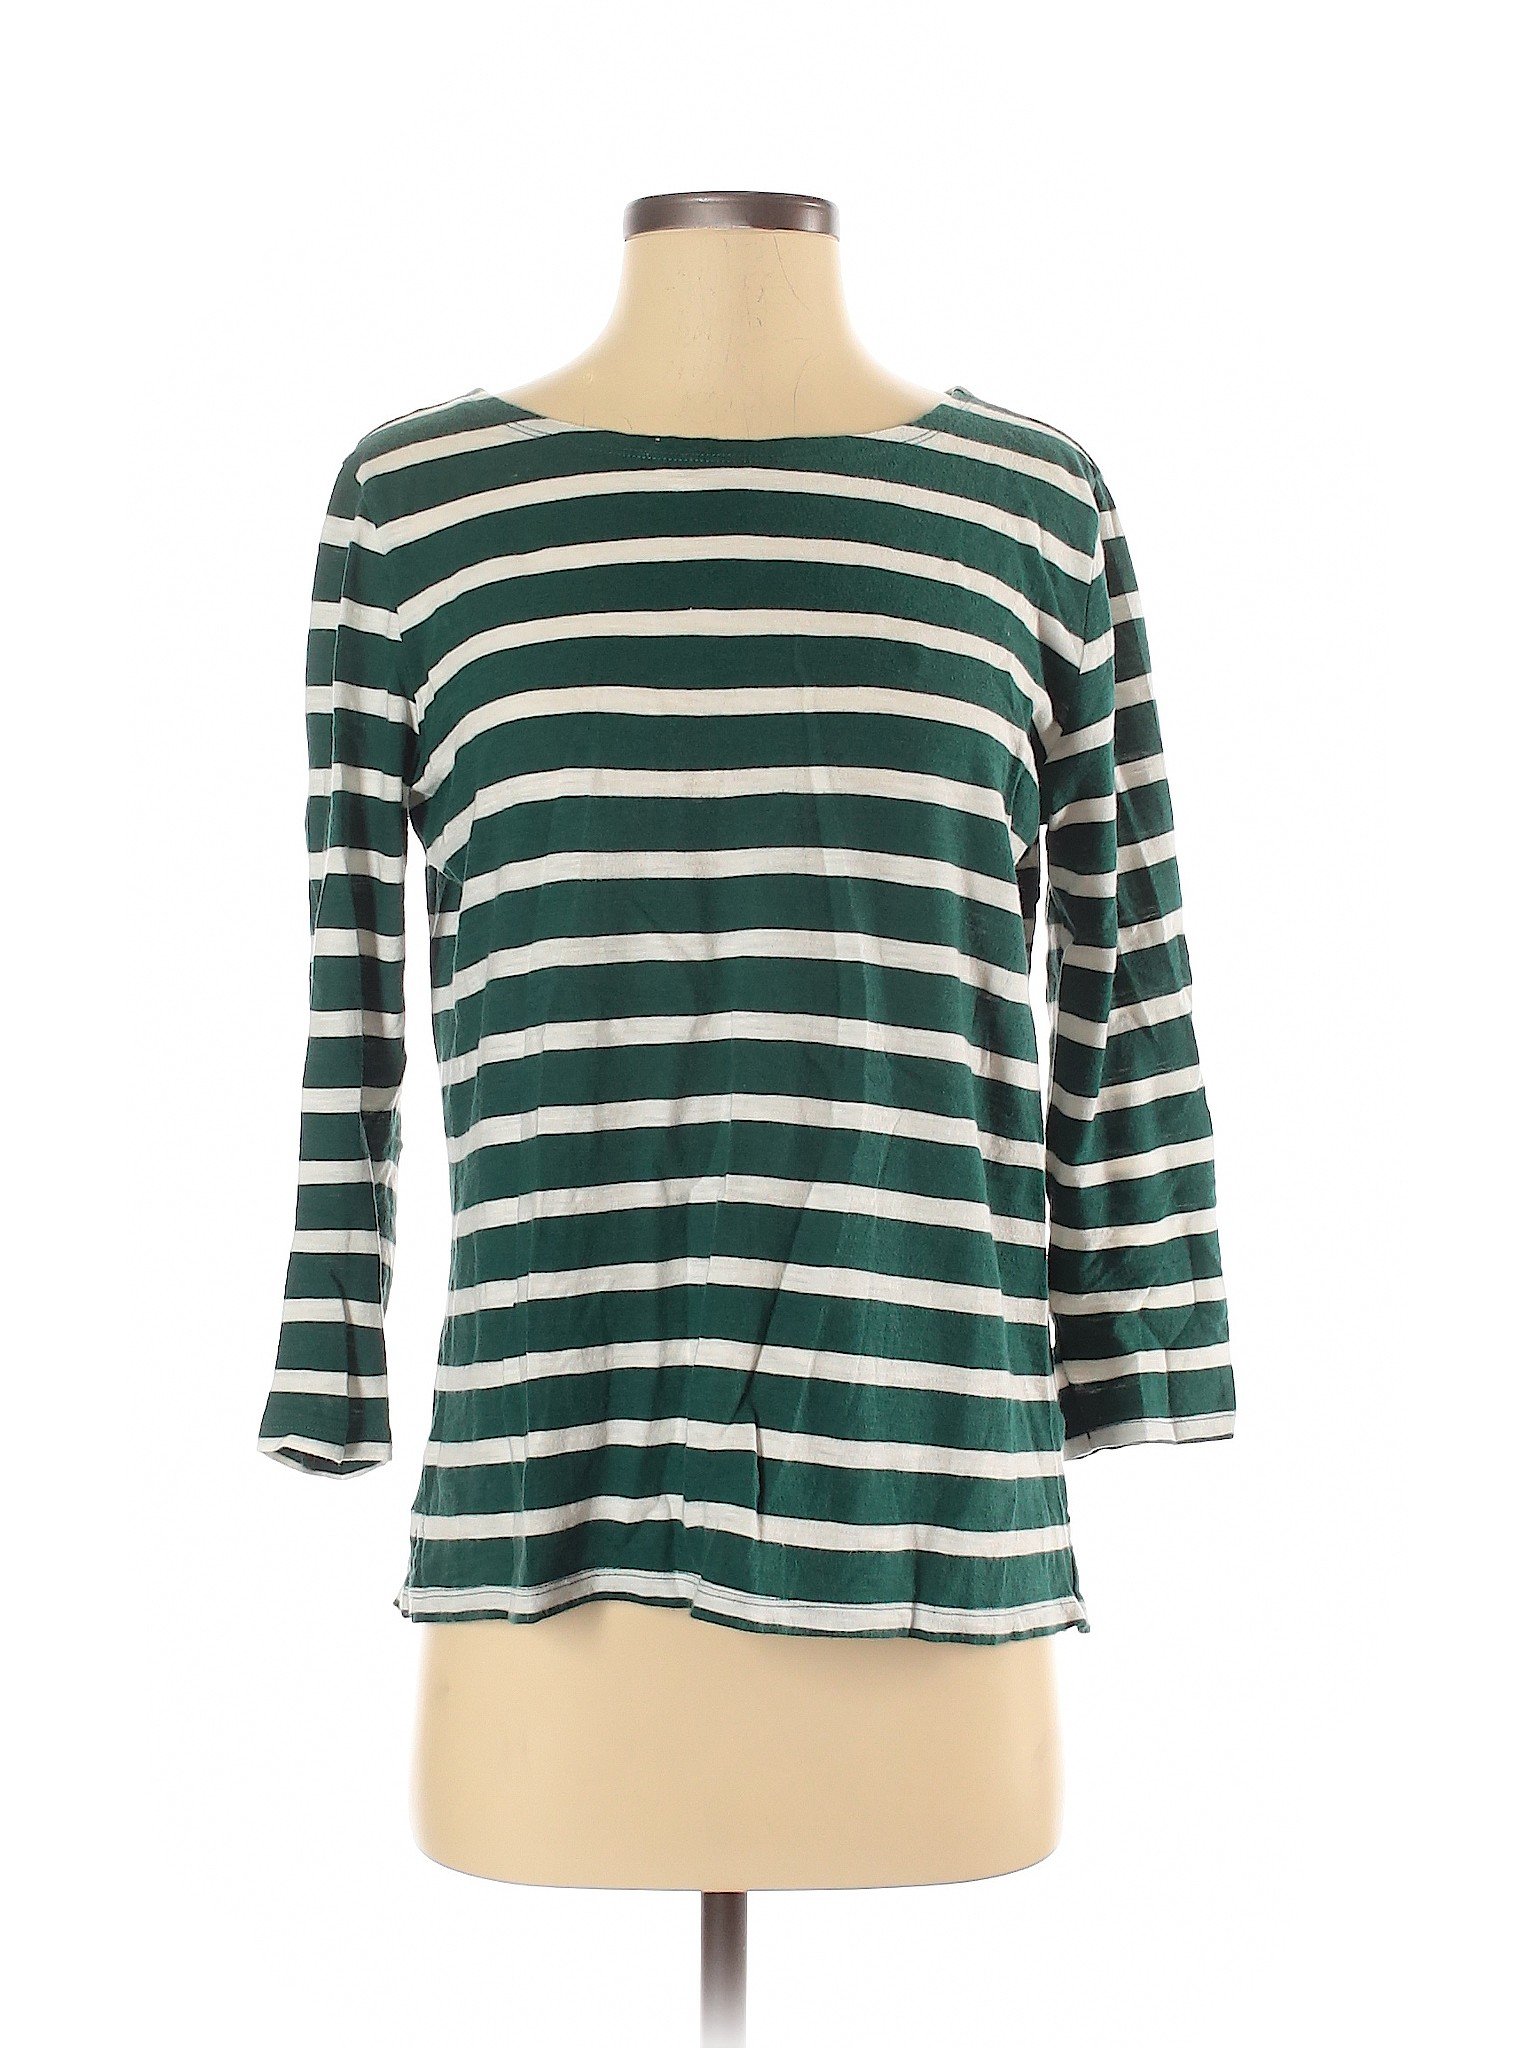 Old Navy Women Green Long Sleeve T-Shirt S | eBay